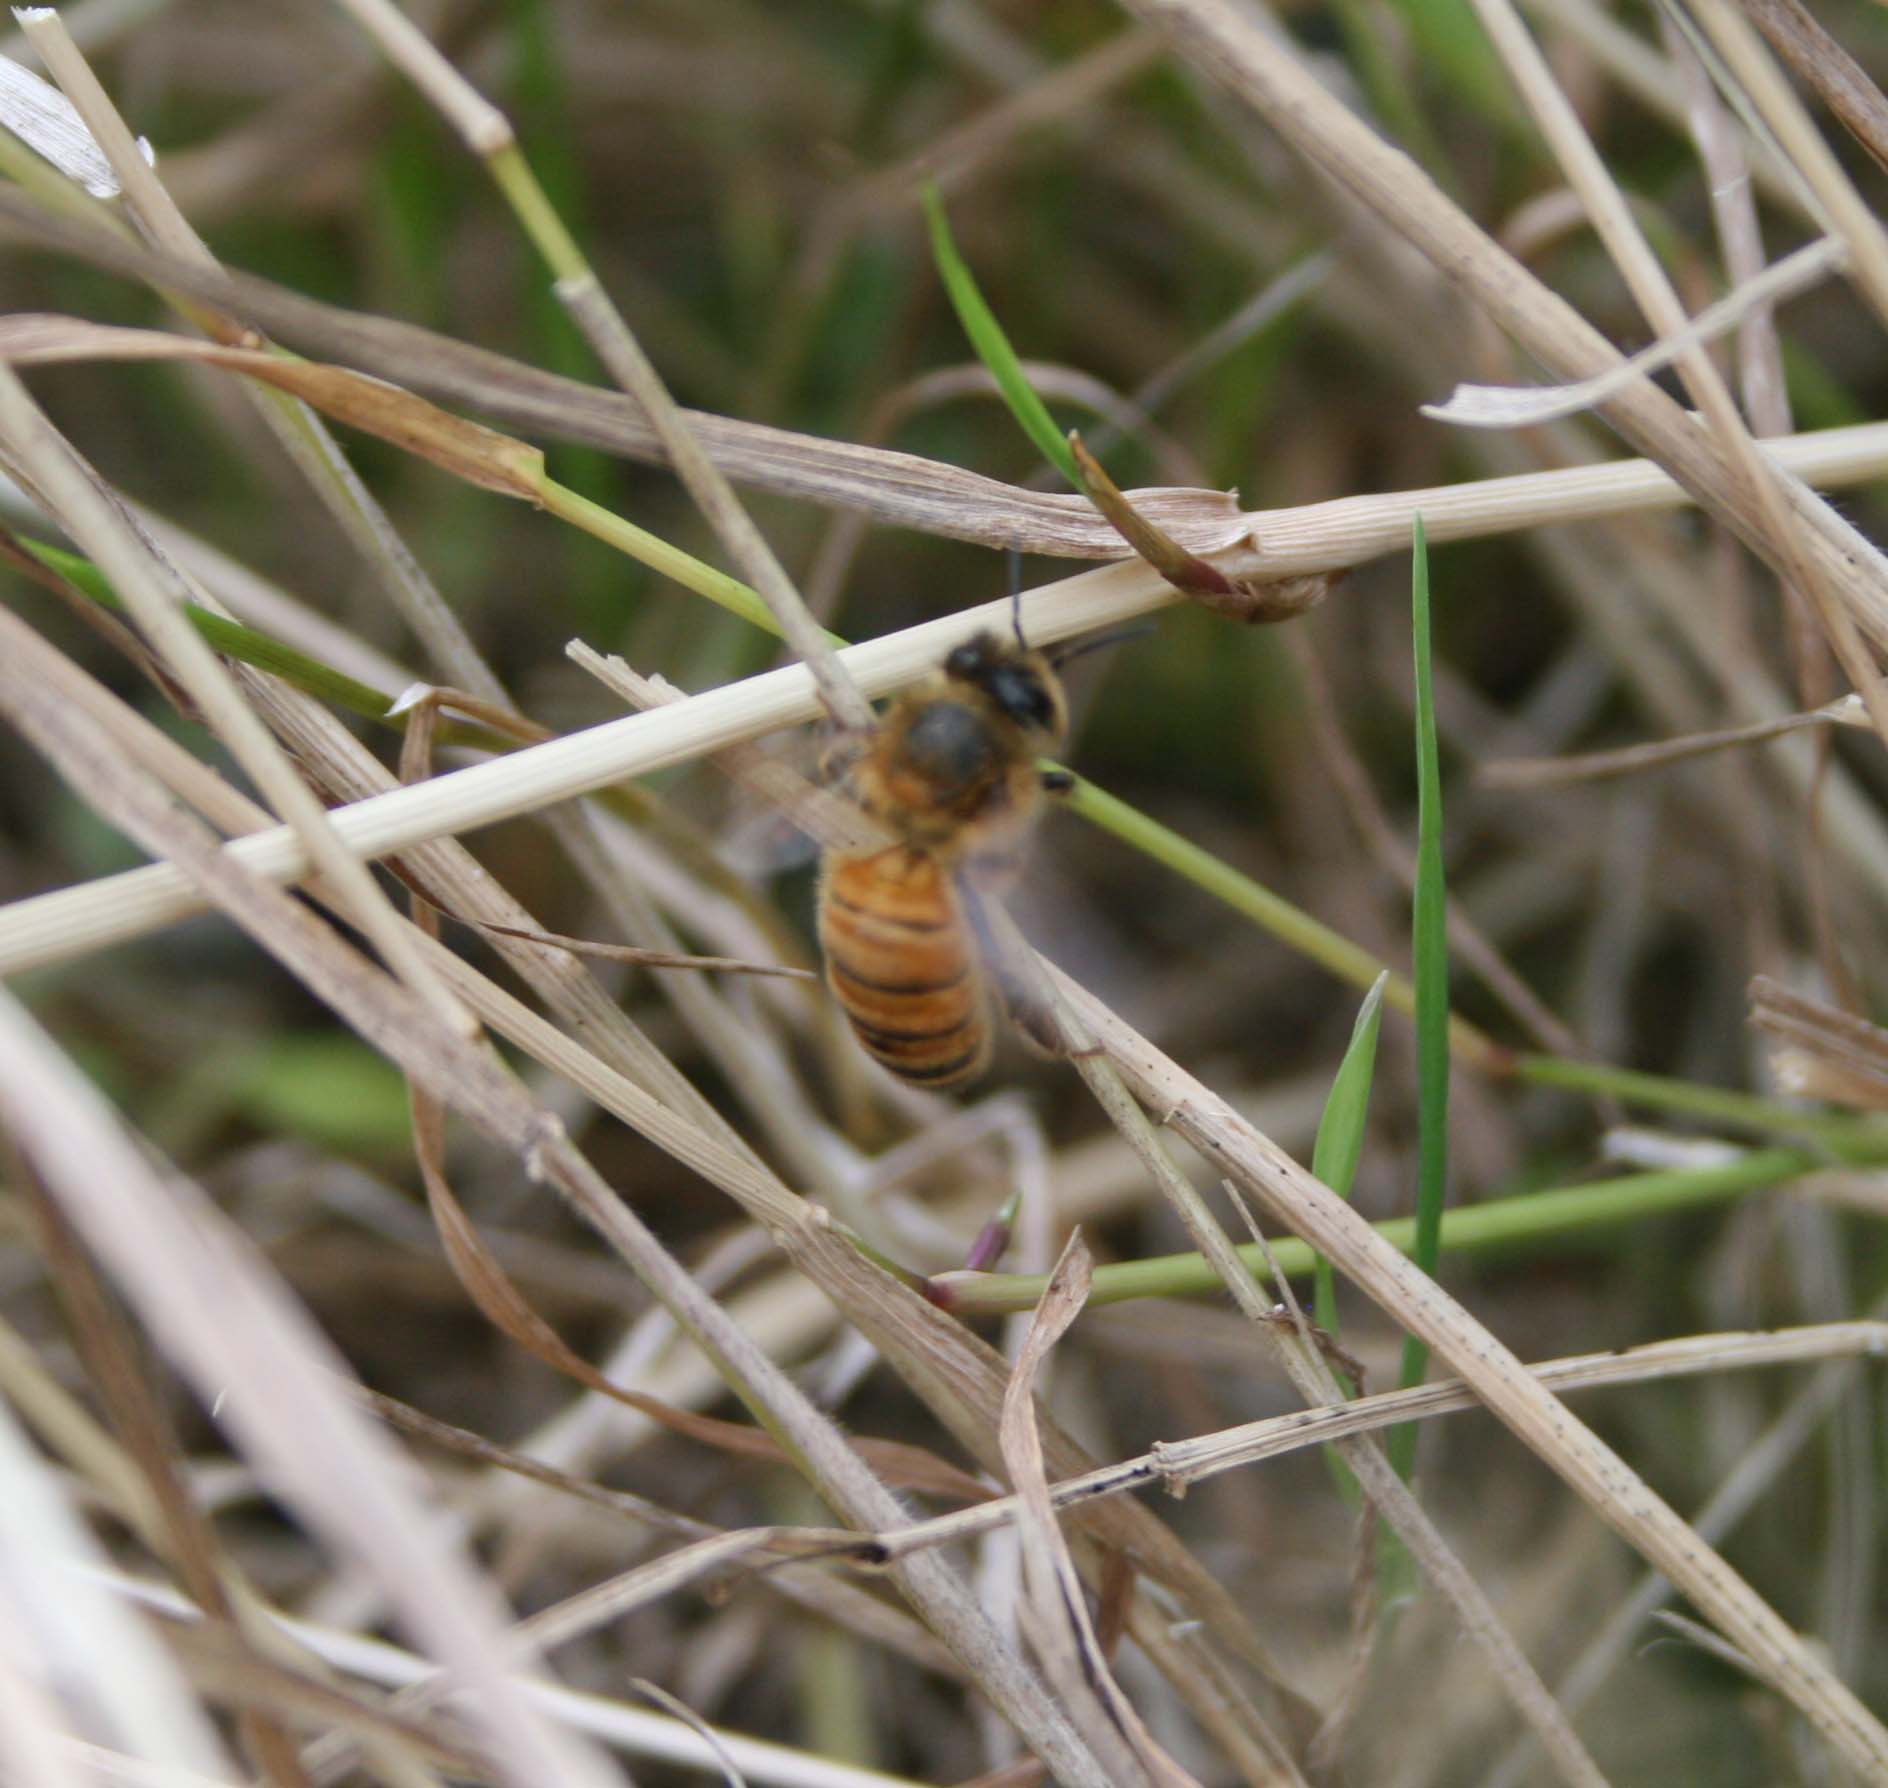 wasps-attacking-bees 077a.jpg